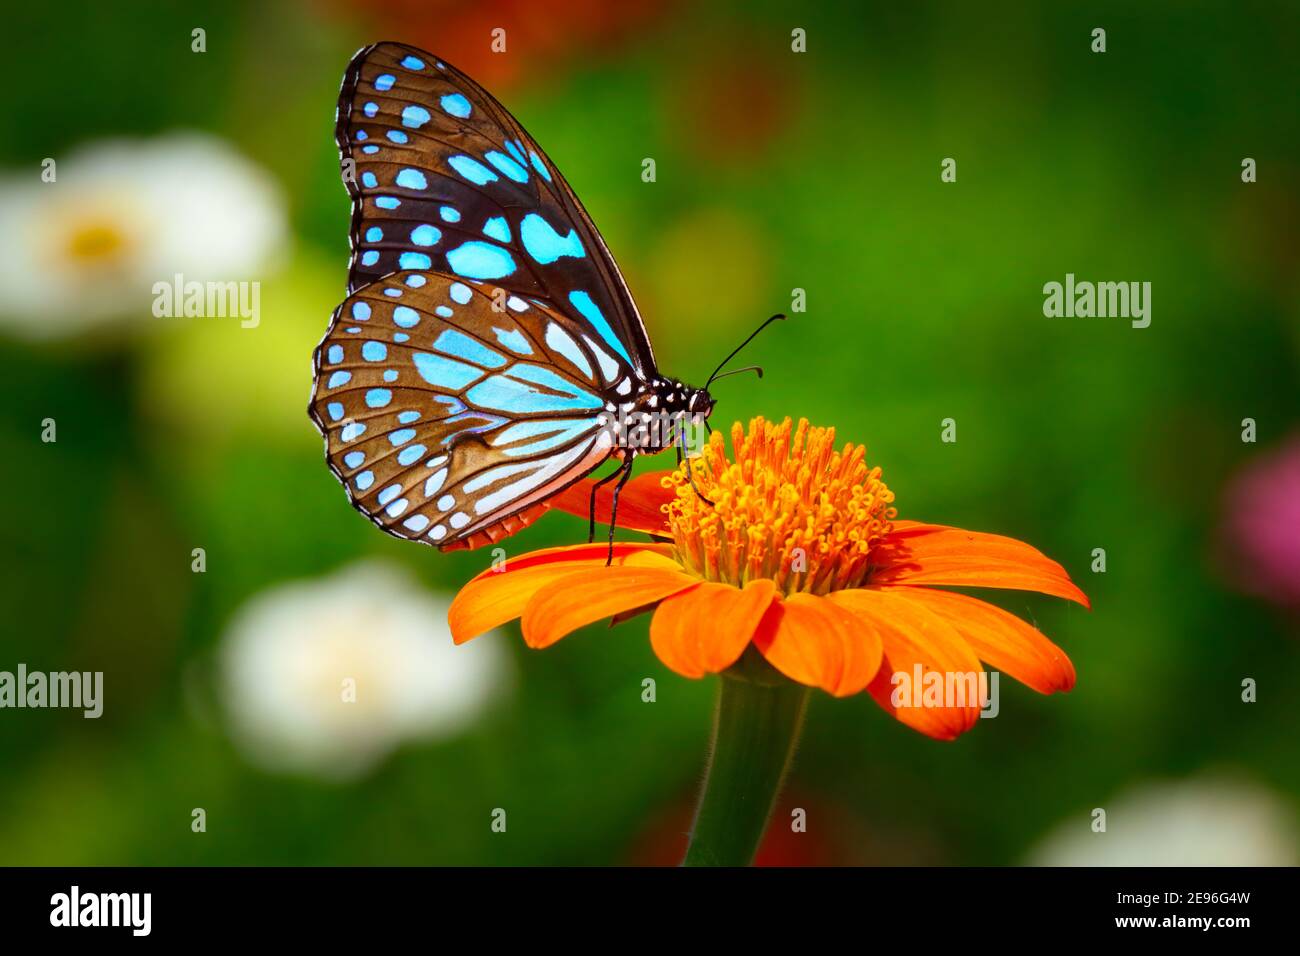 Mariposa Tigre azul o danaid Tirumala limniace sobre la flor de naranja el girasol rojo o el girasol mexicano (Tithonia rotundifolia, familia Asteraceae), Foto de stock